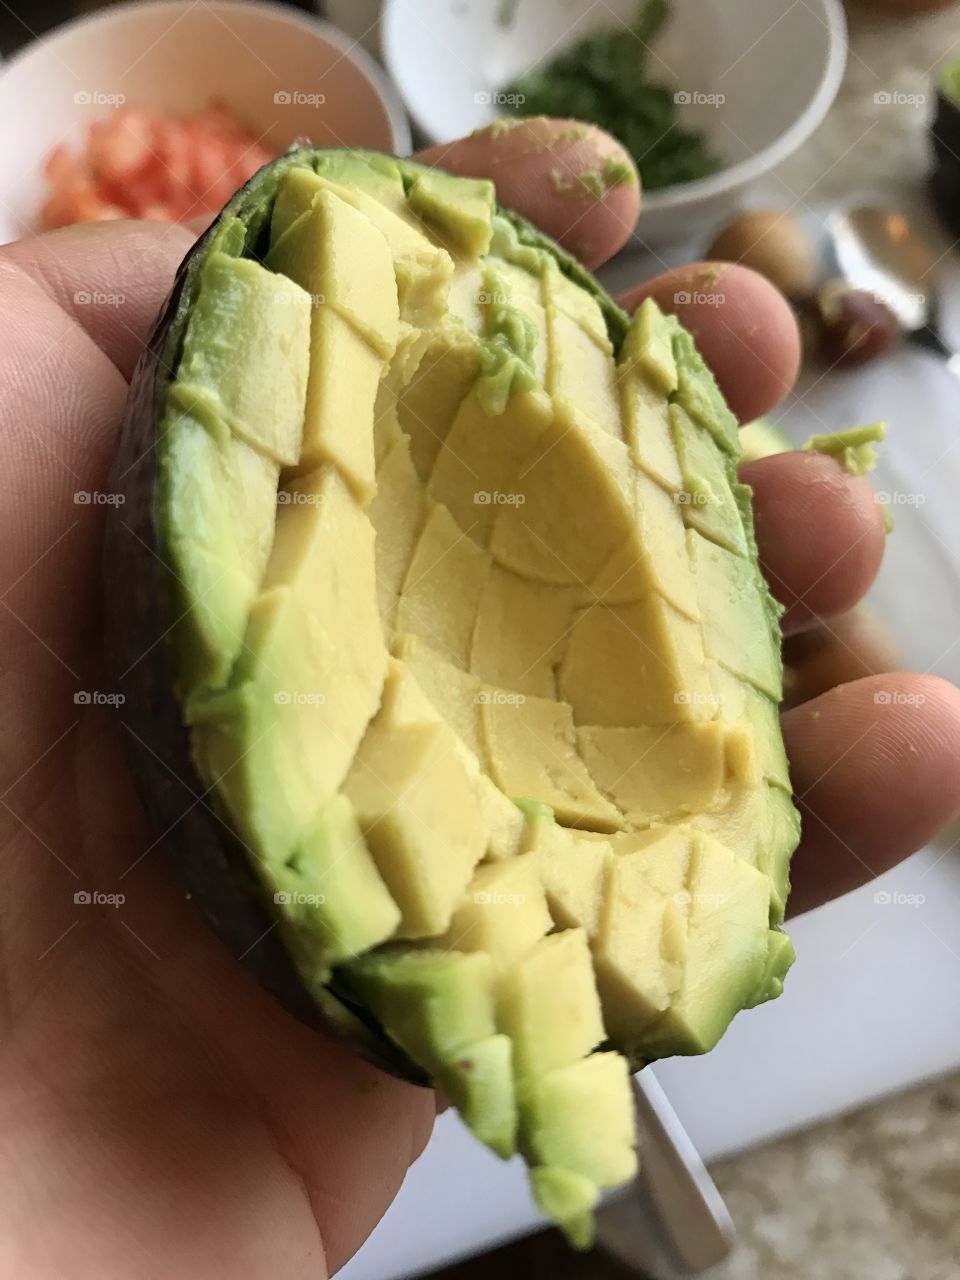 Avocado cut